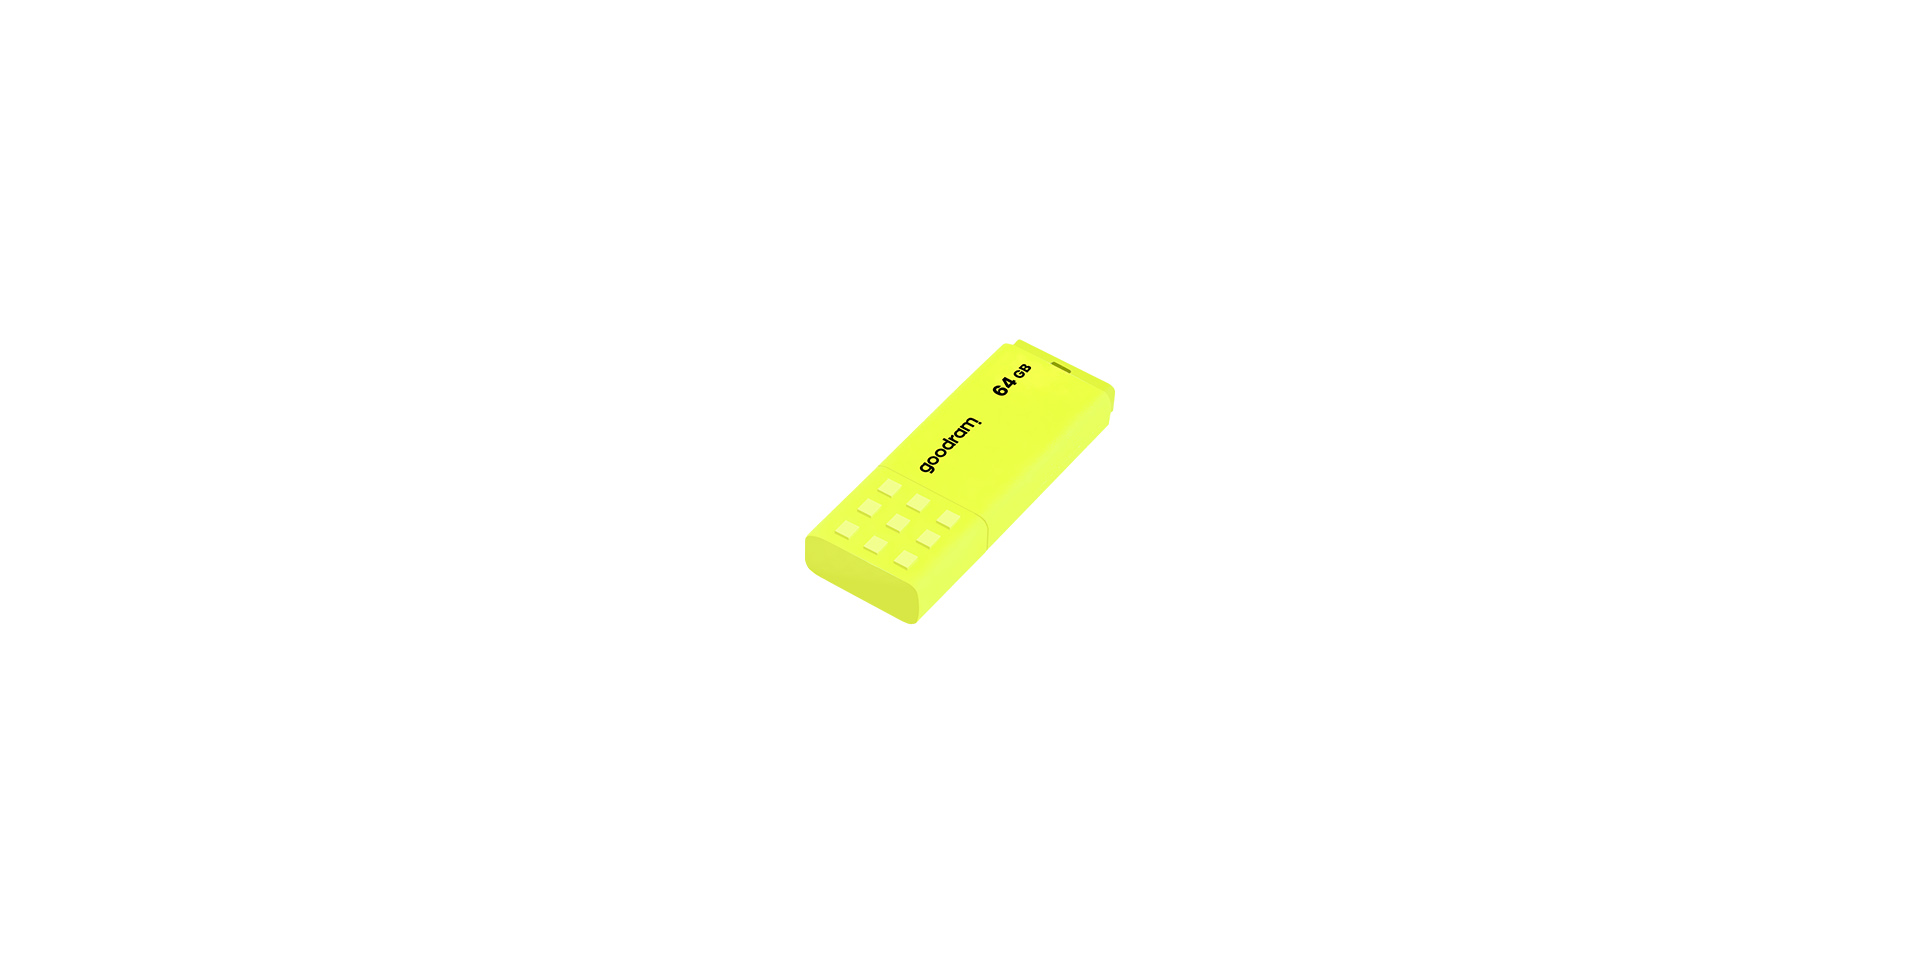 16GB USB 2.0 Yellow - UME2